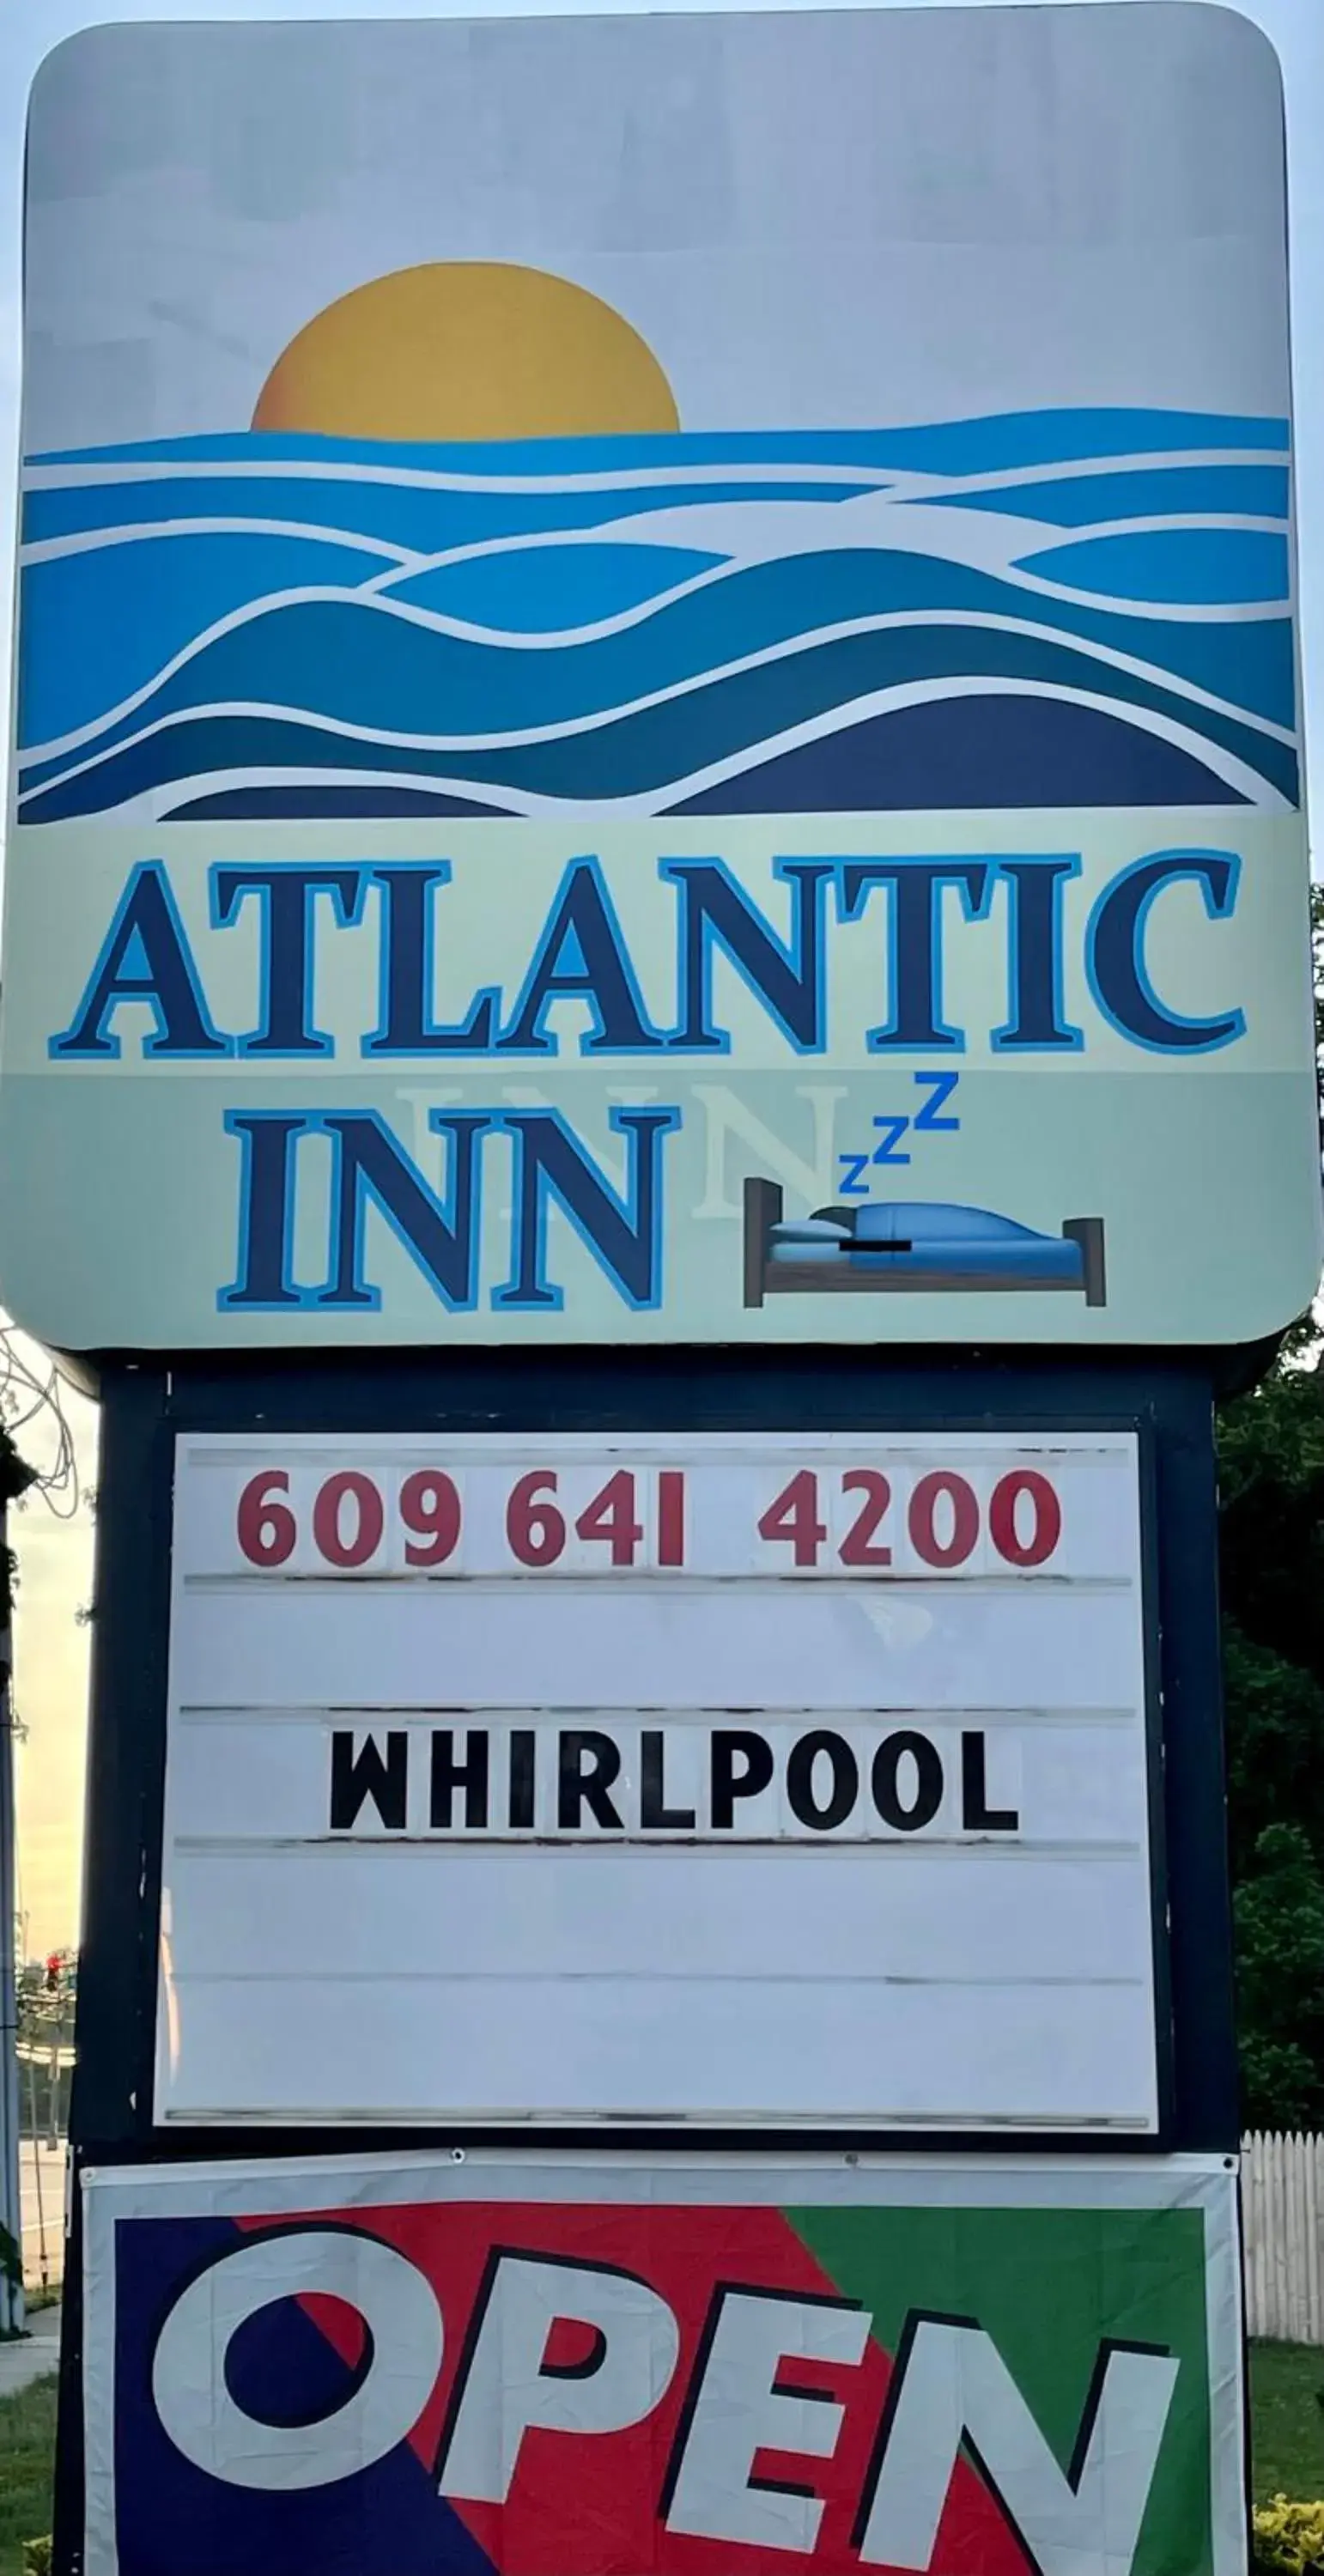 Property logo or sign in Atlantic Inn